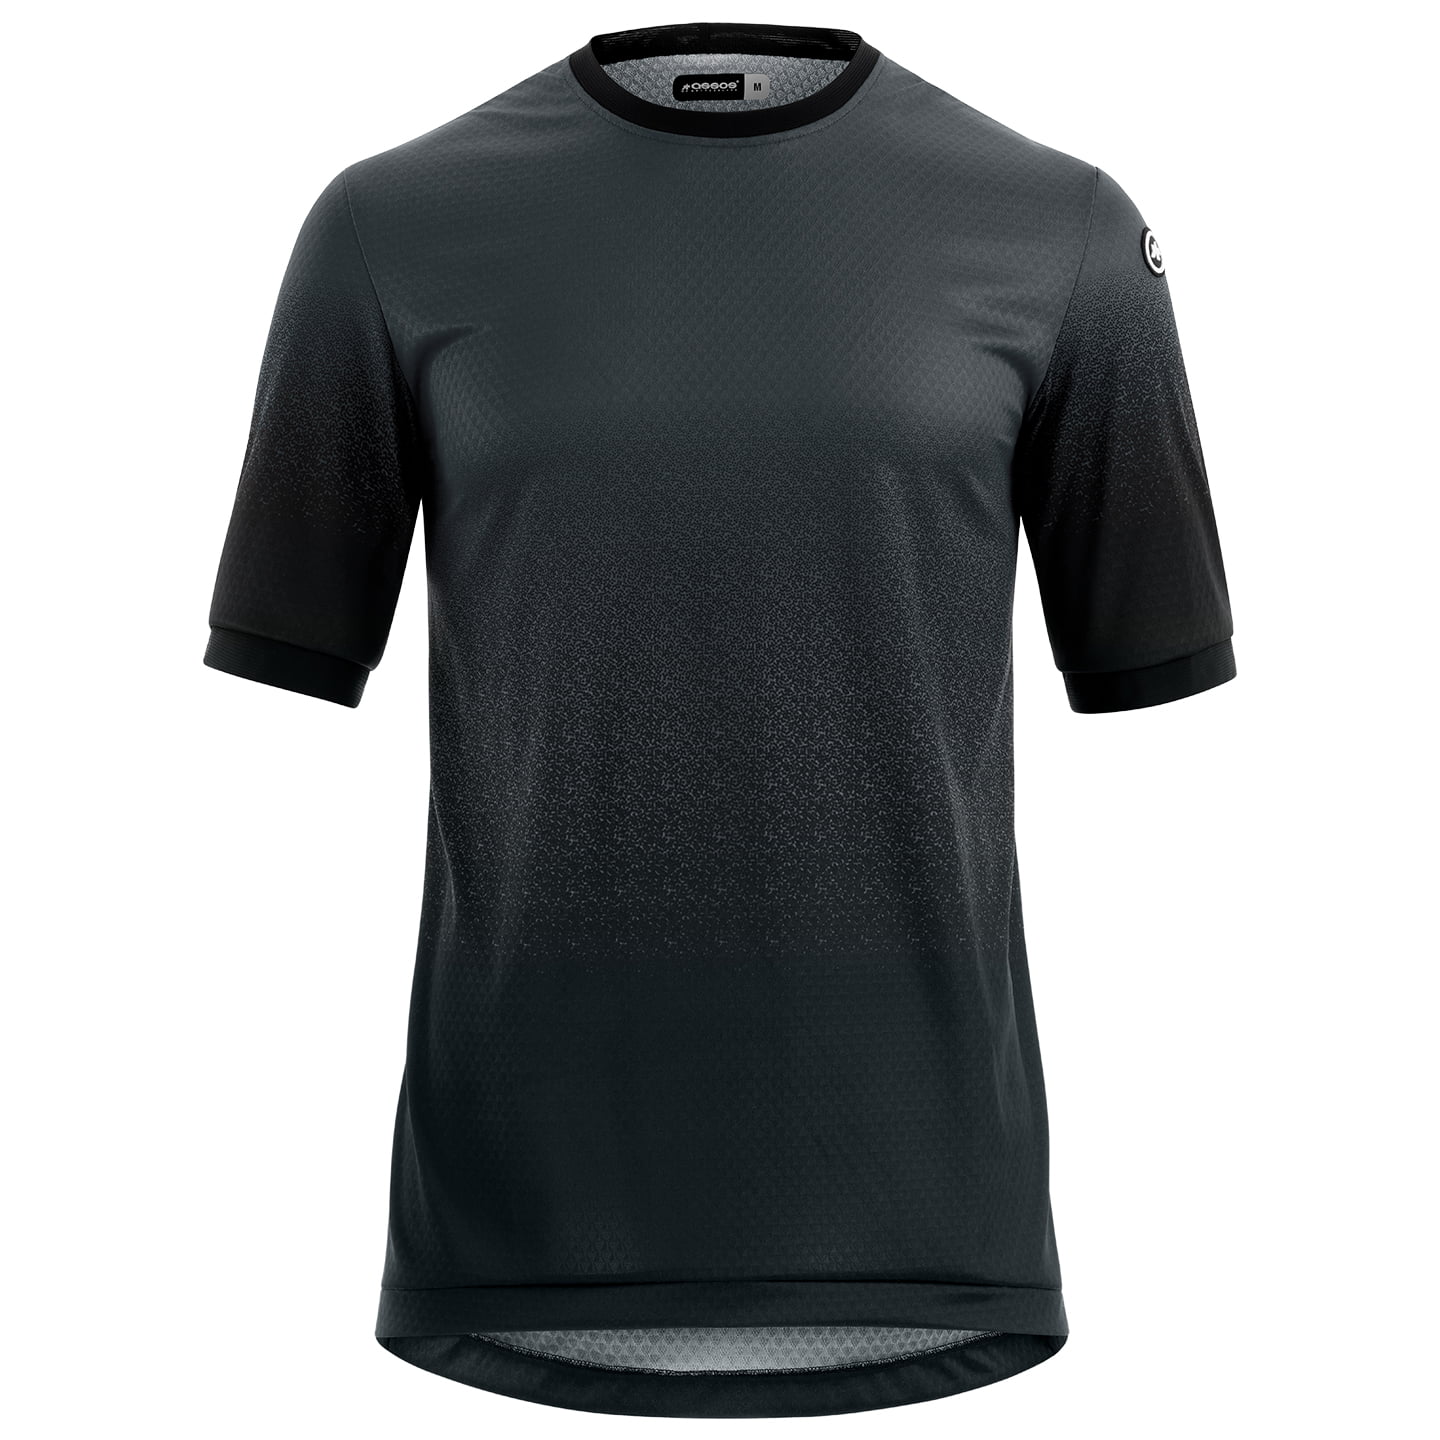 ASSOS Trail T3 Bike Shirt, for men, size M, Cycling jersey, Cycling clothing